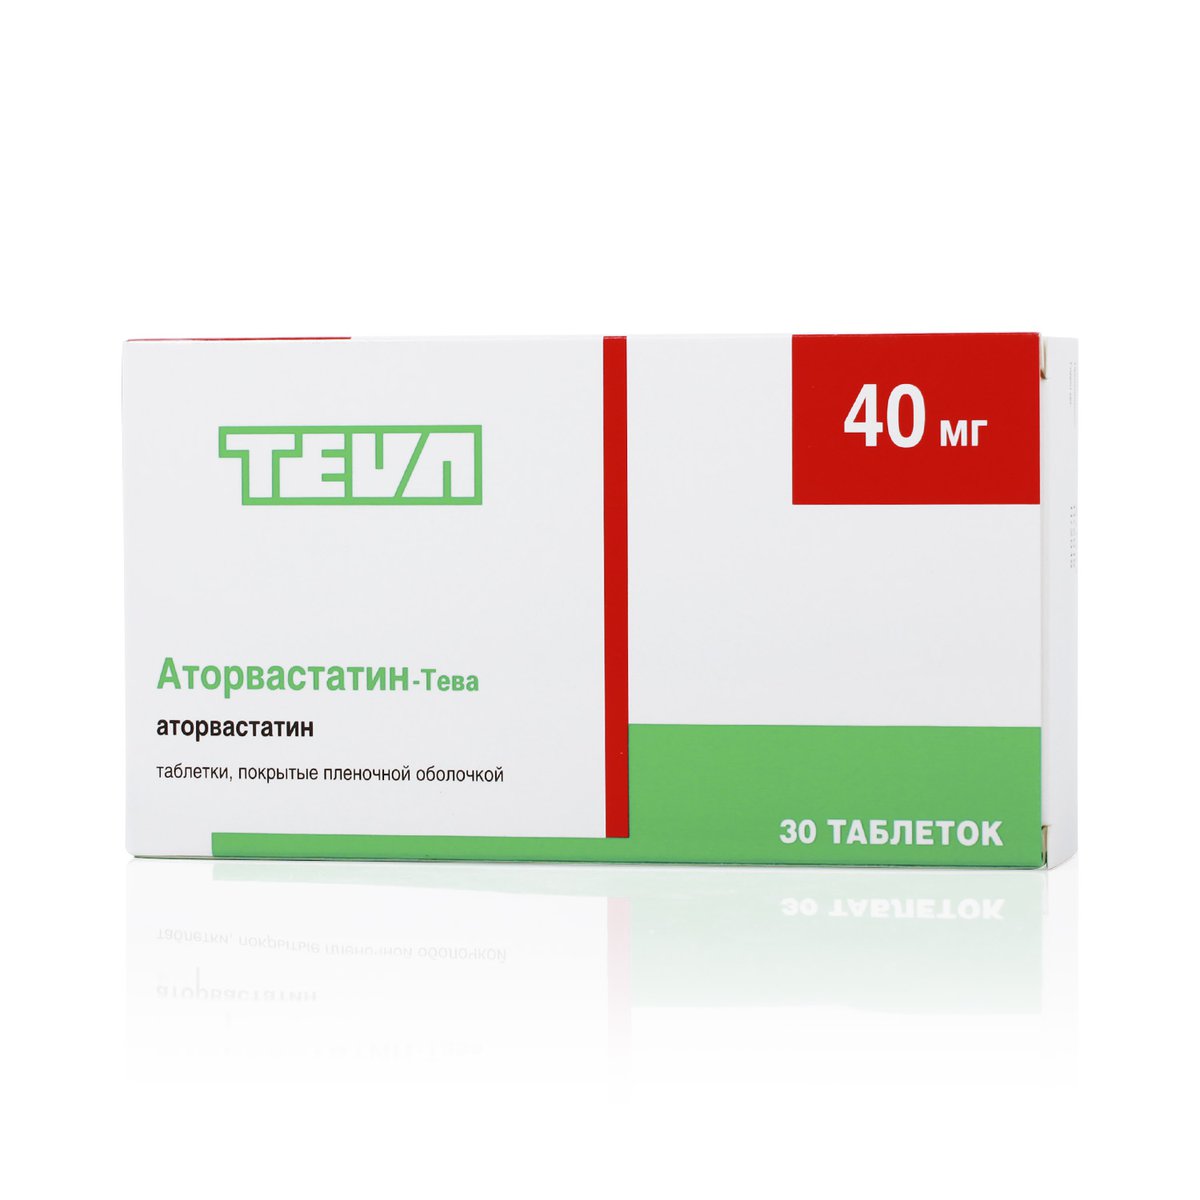 Аторвастатин-Тева (таблетки, 30 шт, 40 мг) - цена,  онлайн в .